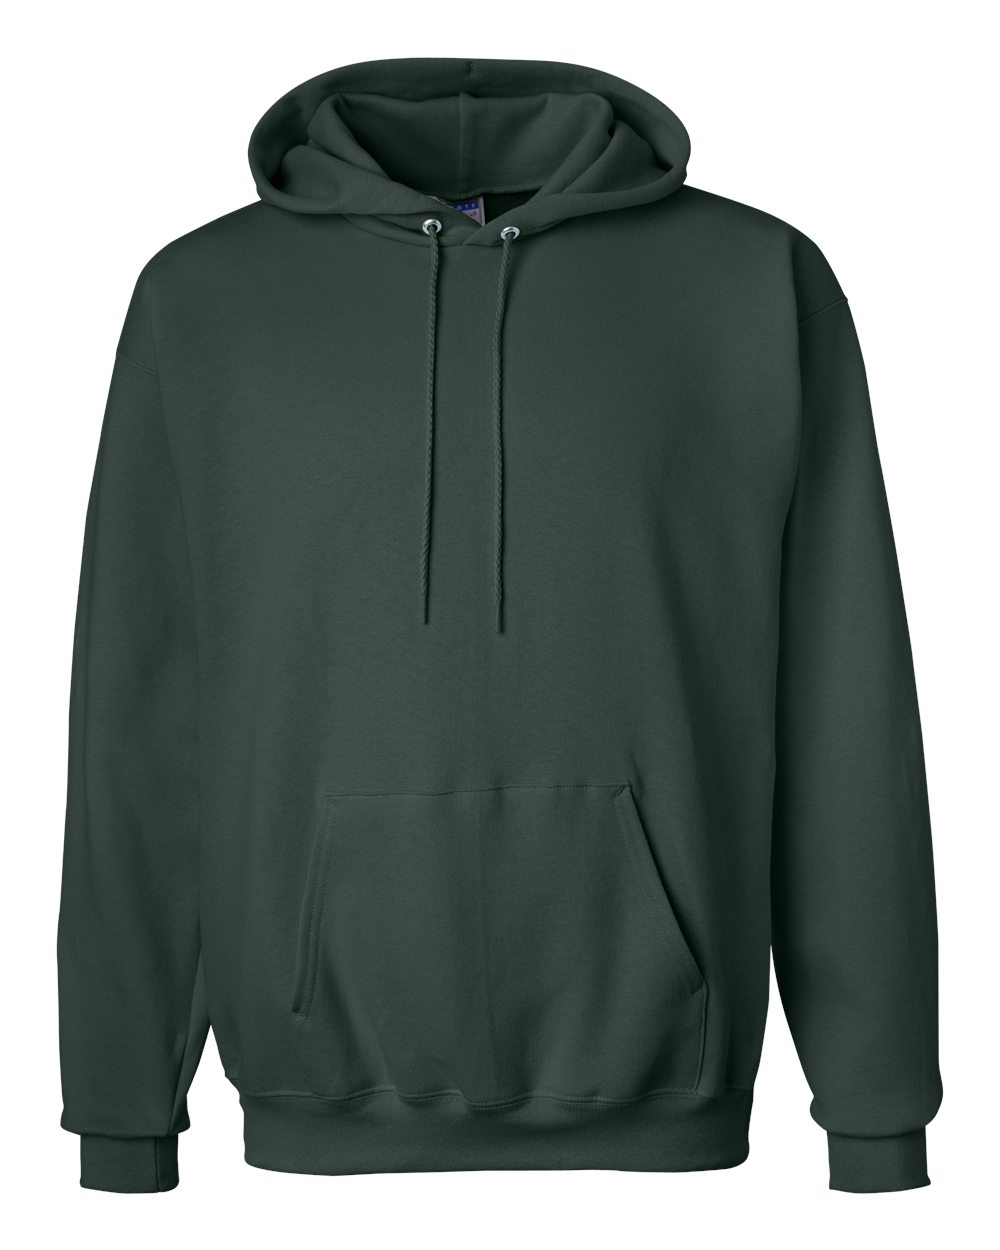 Hanes Mens Blank Ultimate Cotton Hooded Sweatshirt F170 up to 3XL | eBay